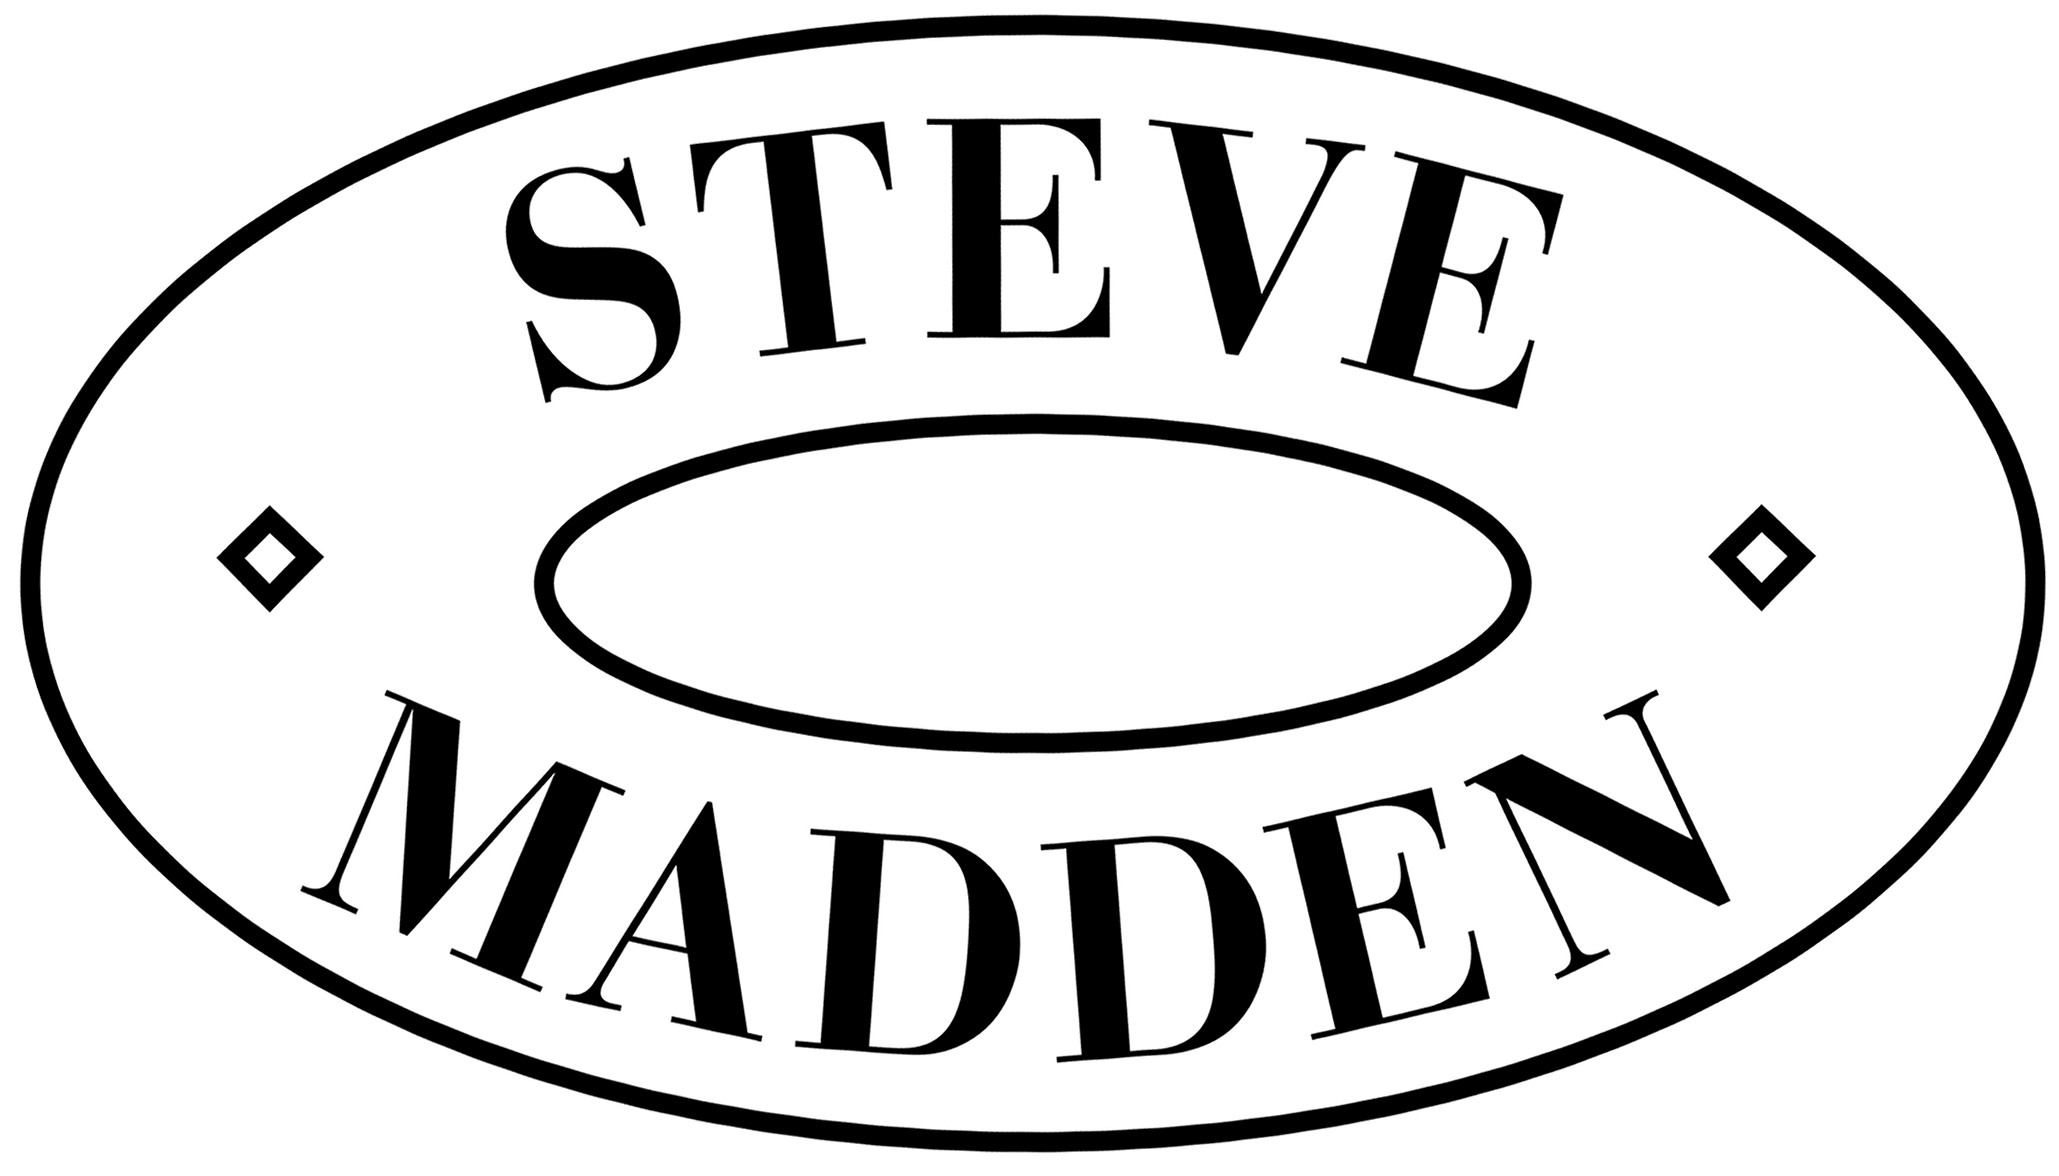 Steve Madden изображение логотипа бренда